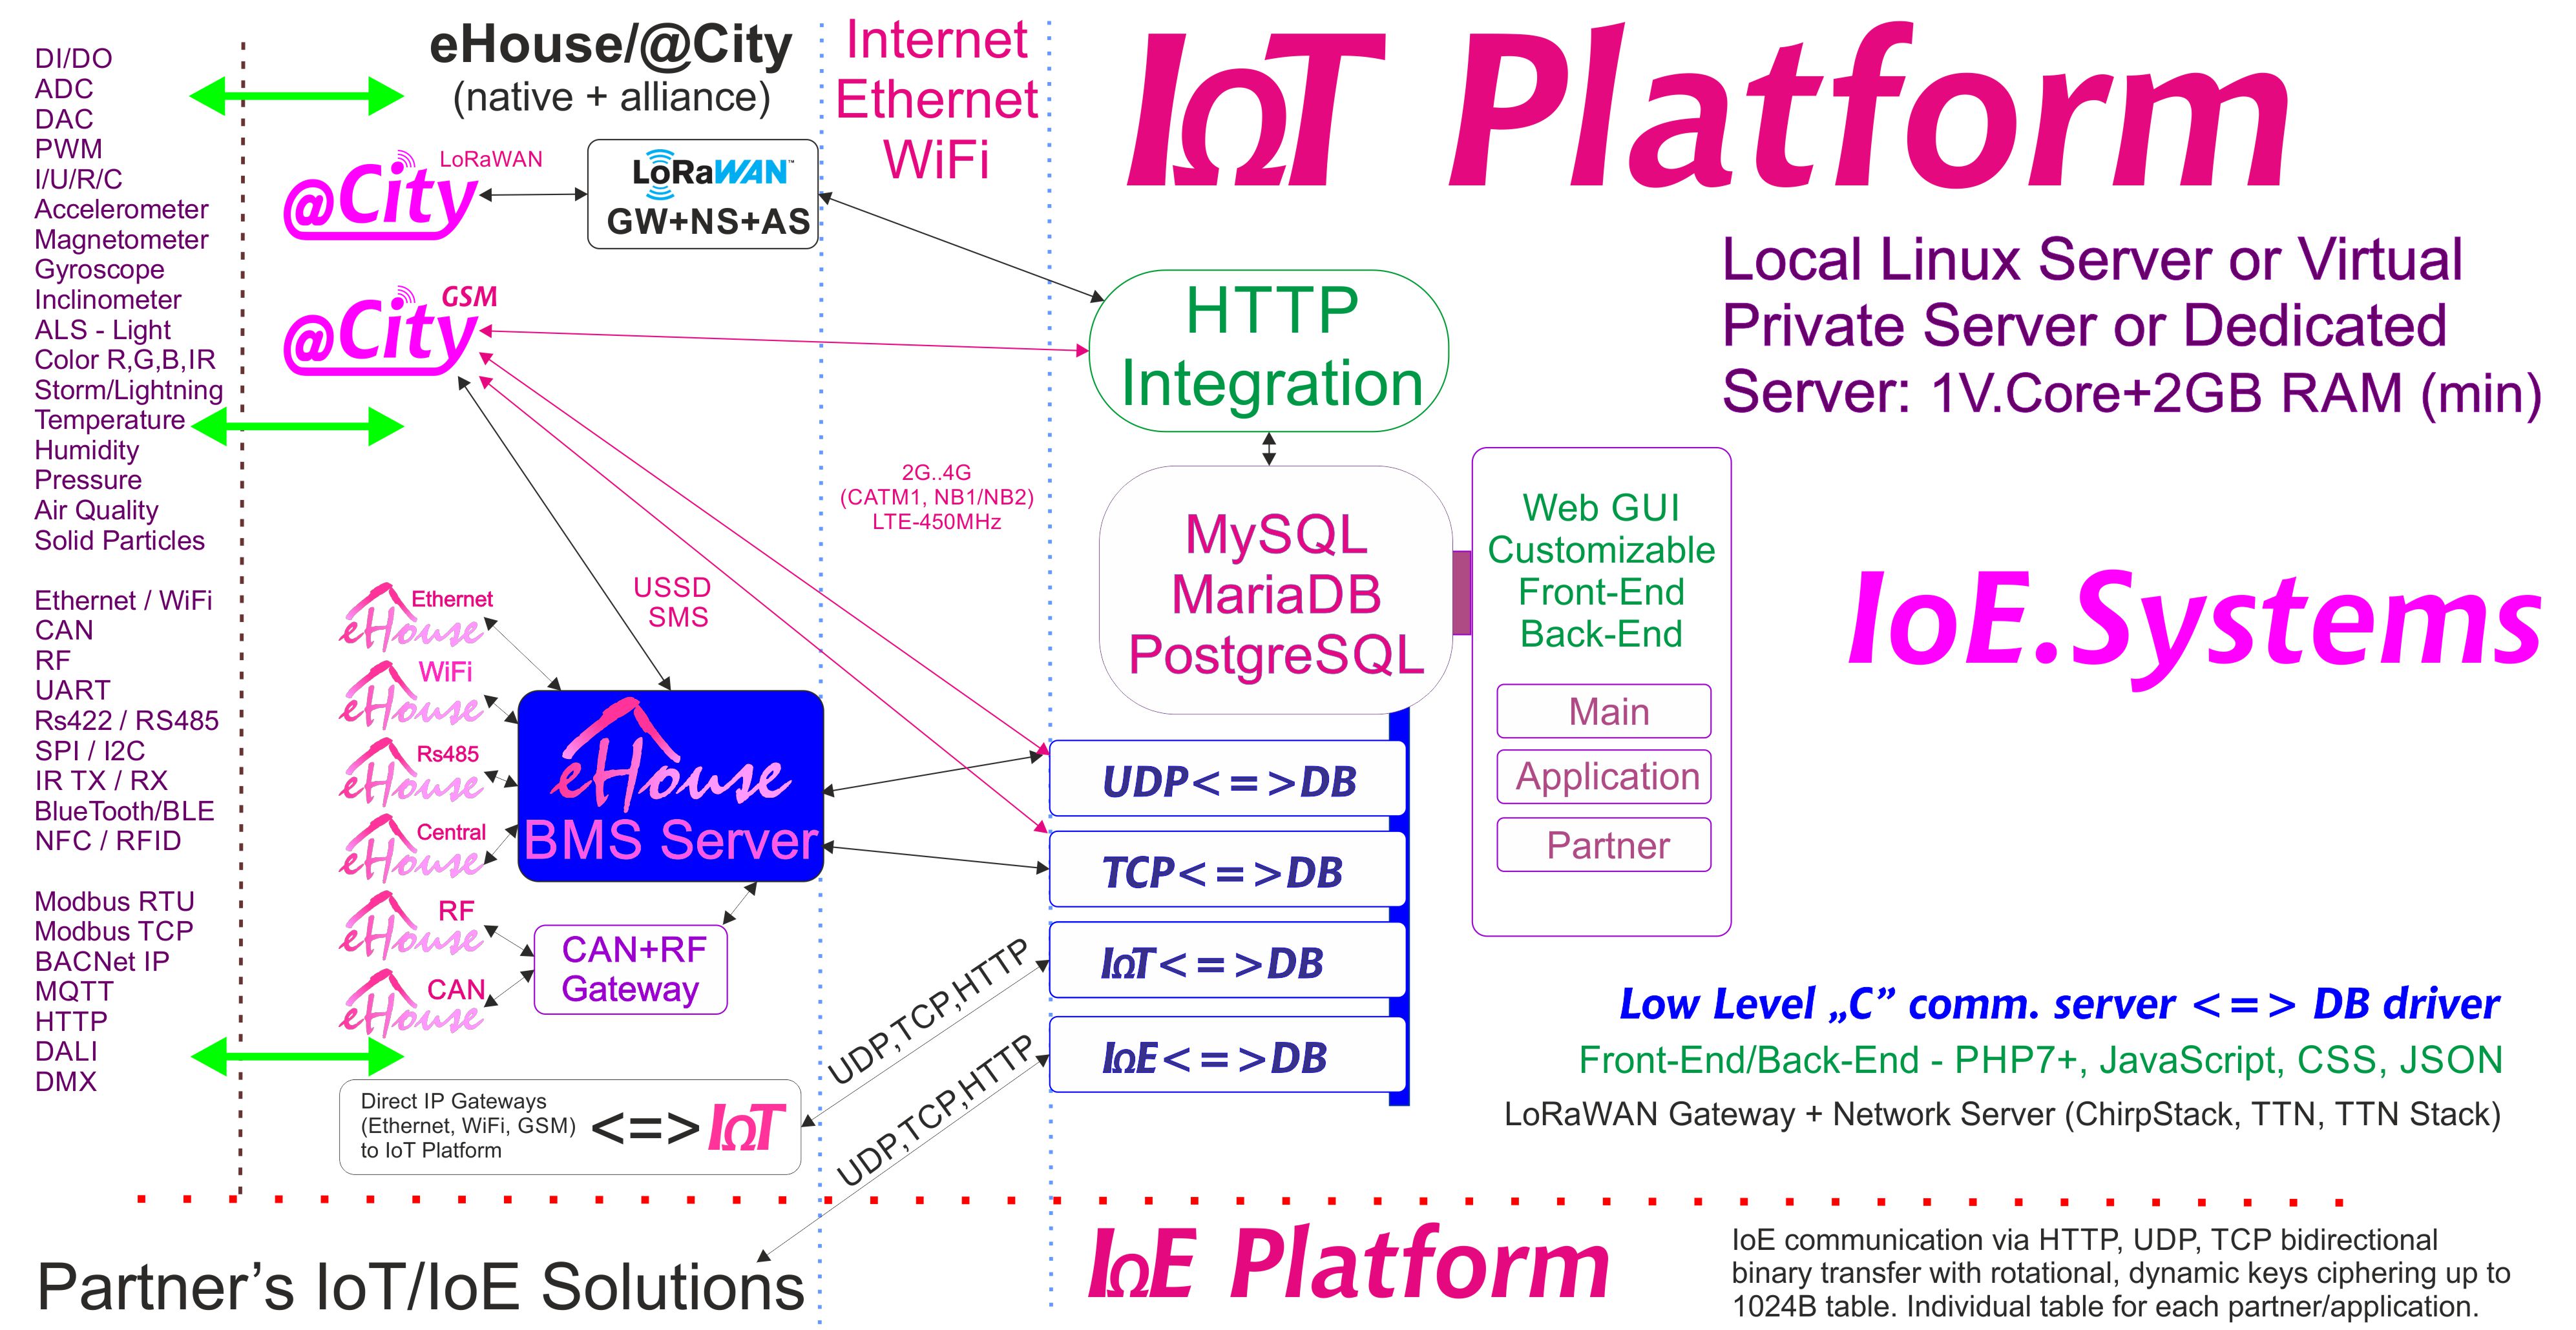 eHouse, Perisian eCity Server BAS, BMS, IoE, IoT Systems dan Platform